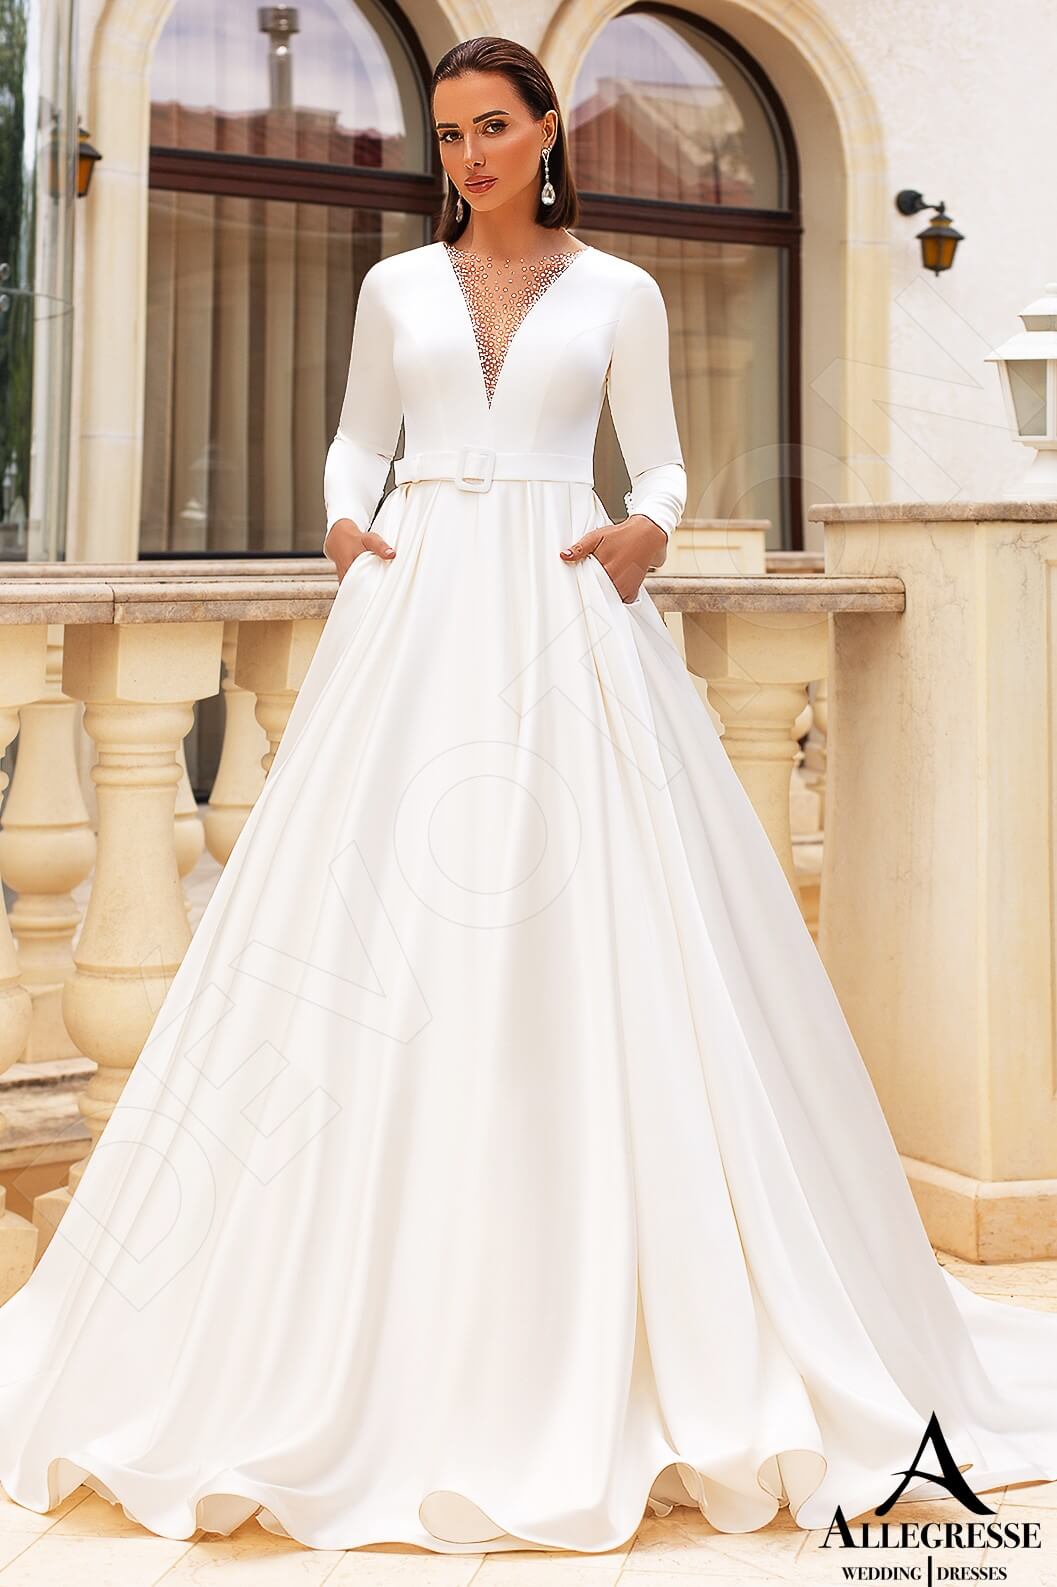 Volettina Princess/Ball Gown Illusion Milk Wedding dress